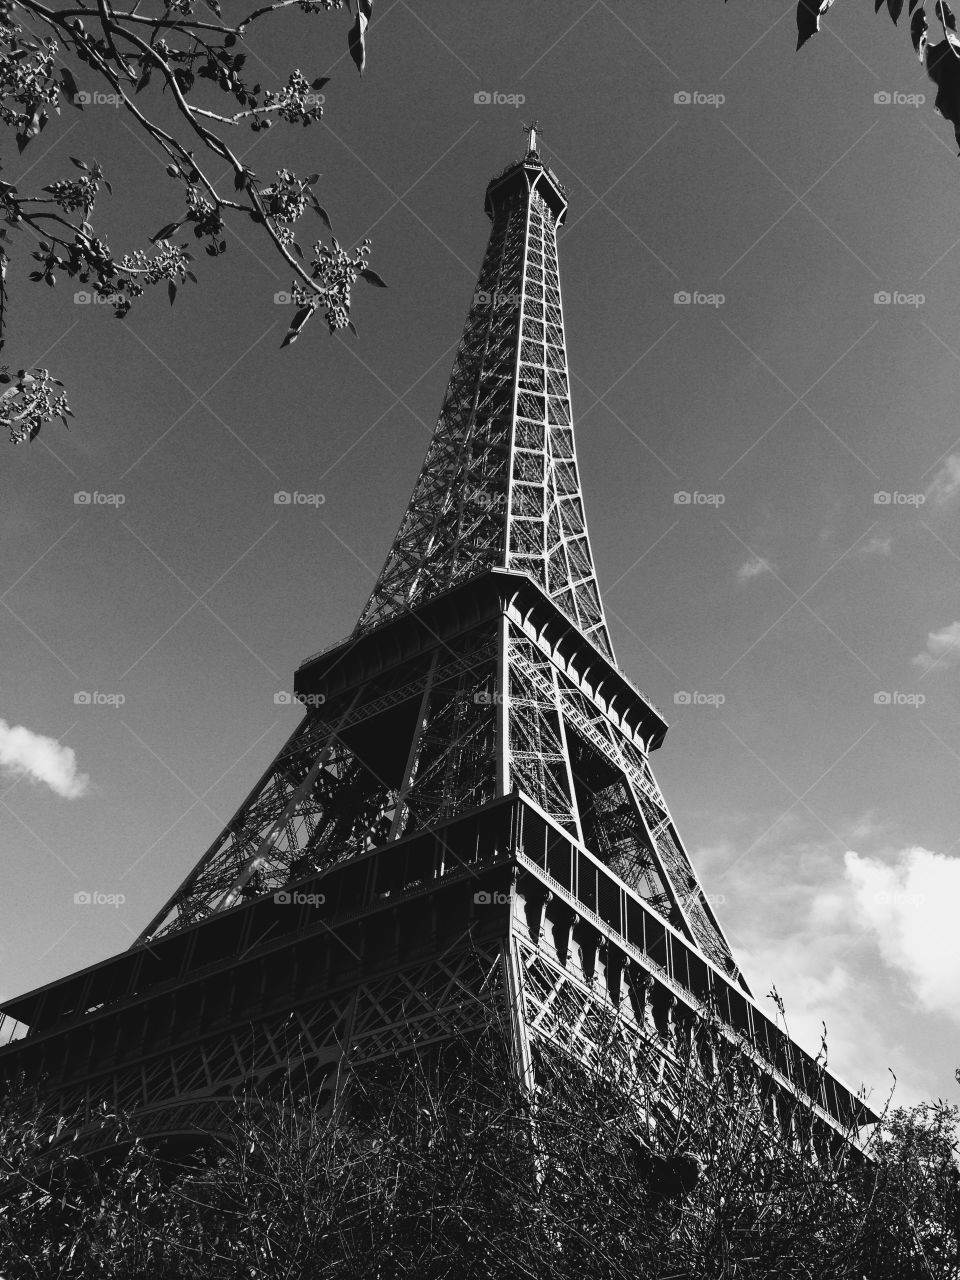 The Eiffel Tower. Paris, France